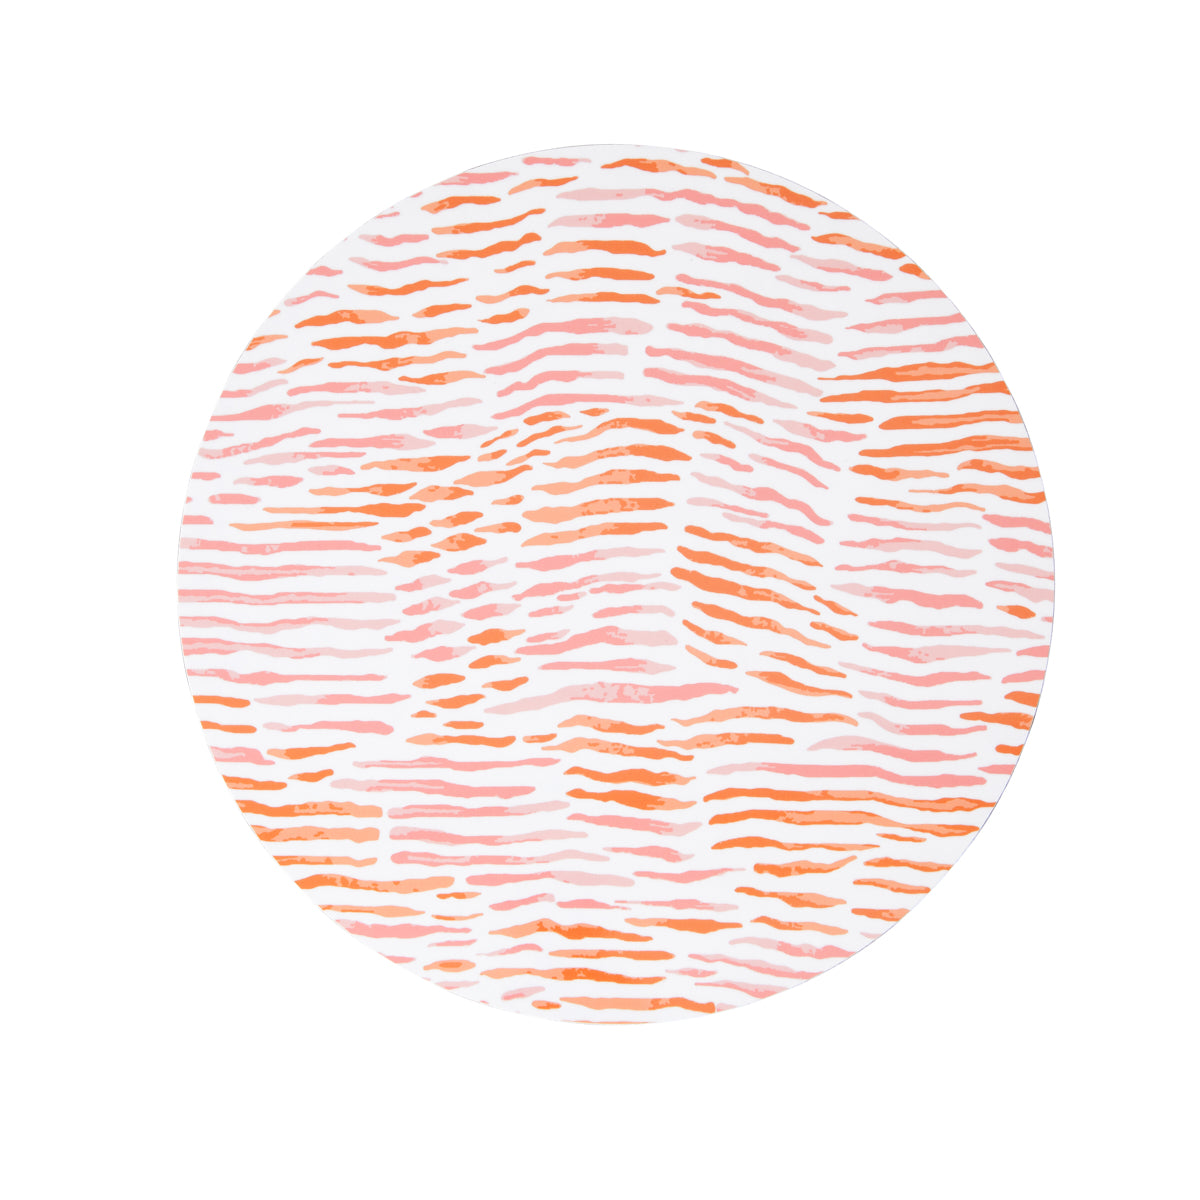 Arles Tablemat - Pink/Orange